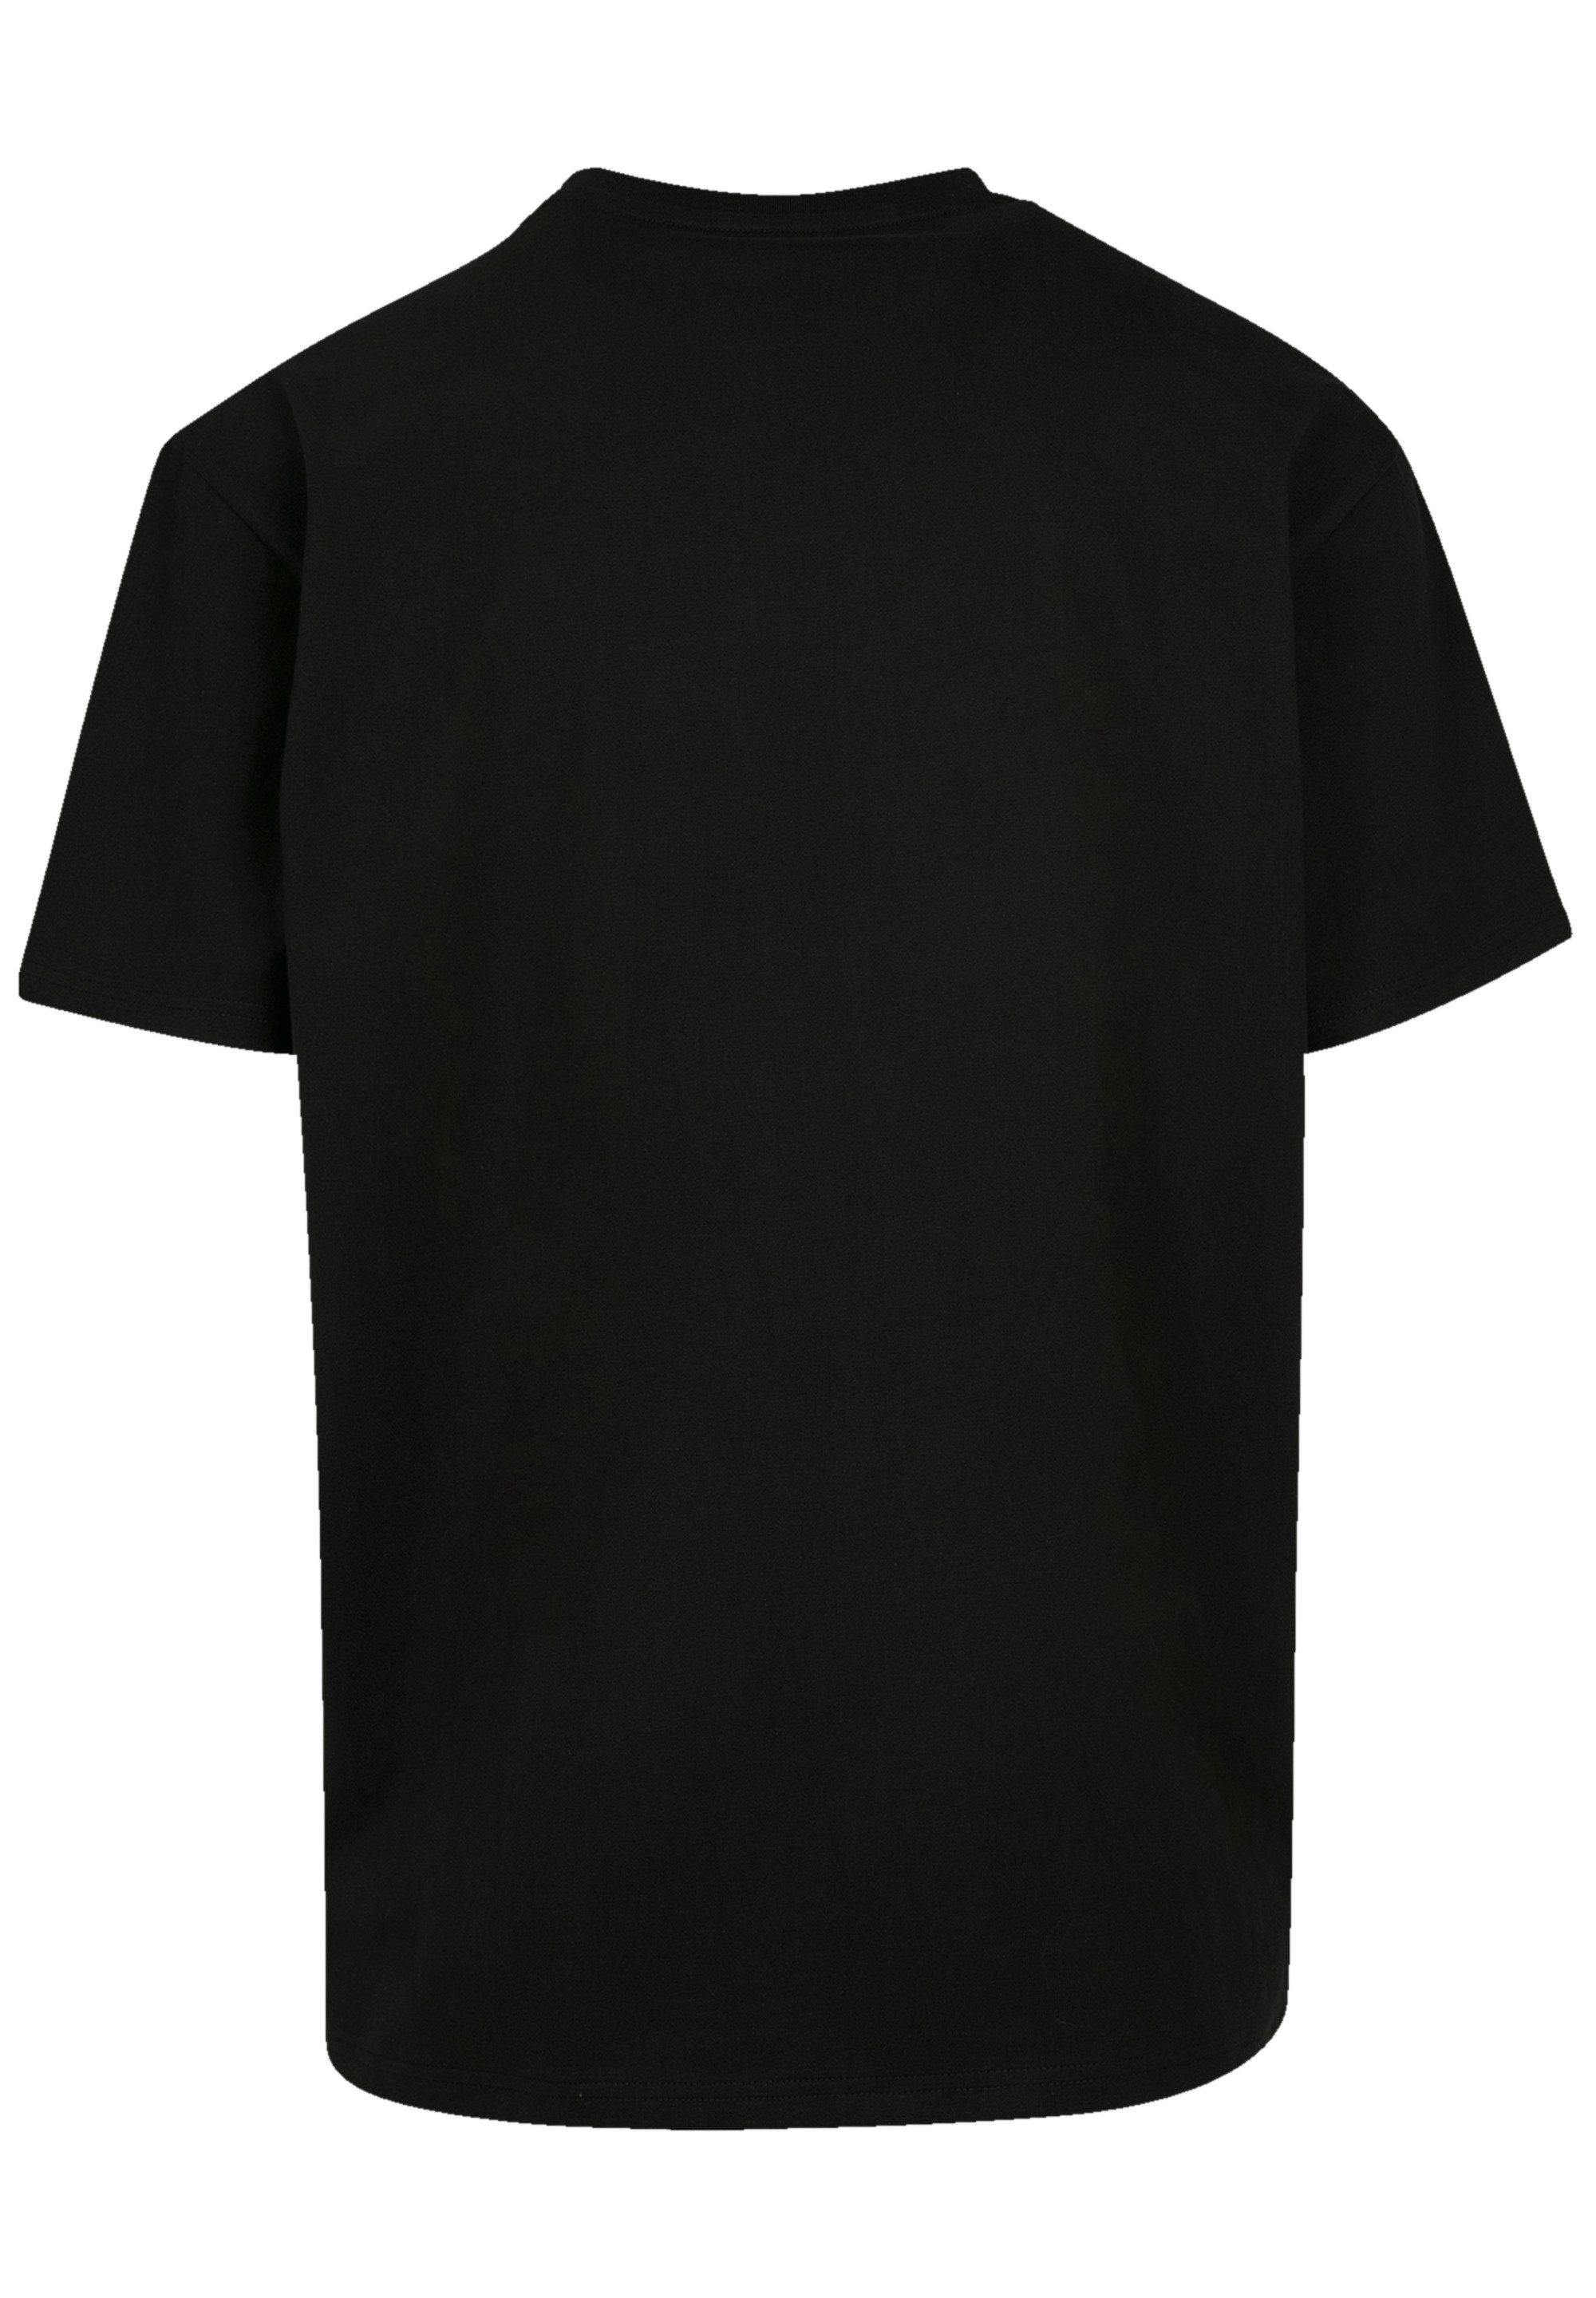 VINTAGE Ramones Rock-Musik T-Shirt Qualität, SEAL Band Premium EAGLE Band, F4NT4STIC Musik Rock schwarz